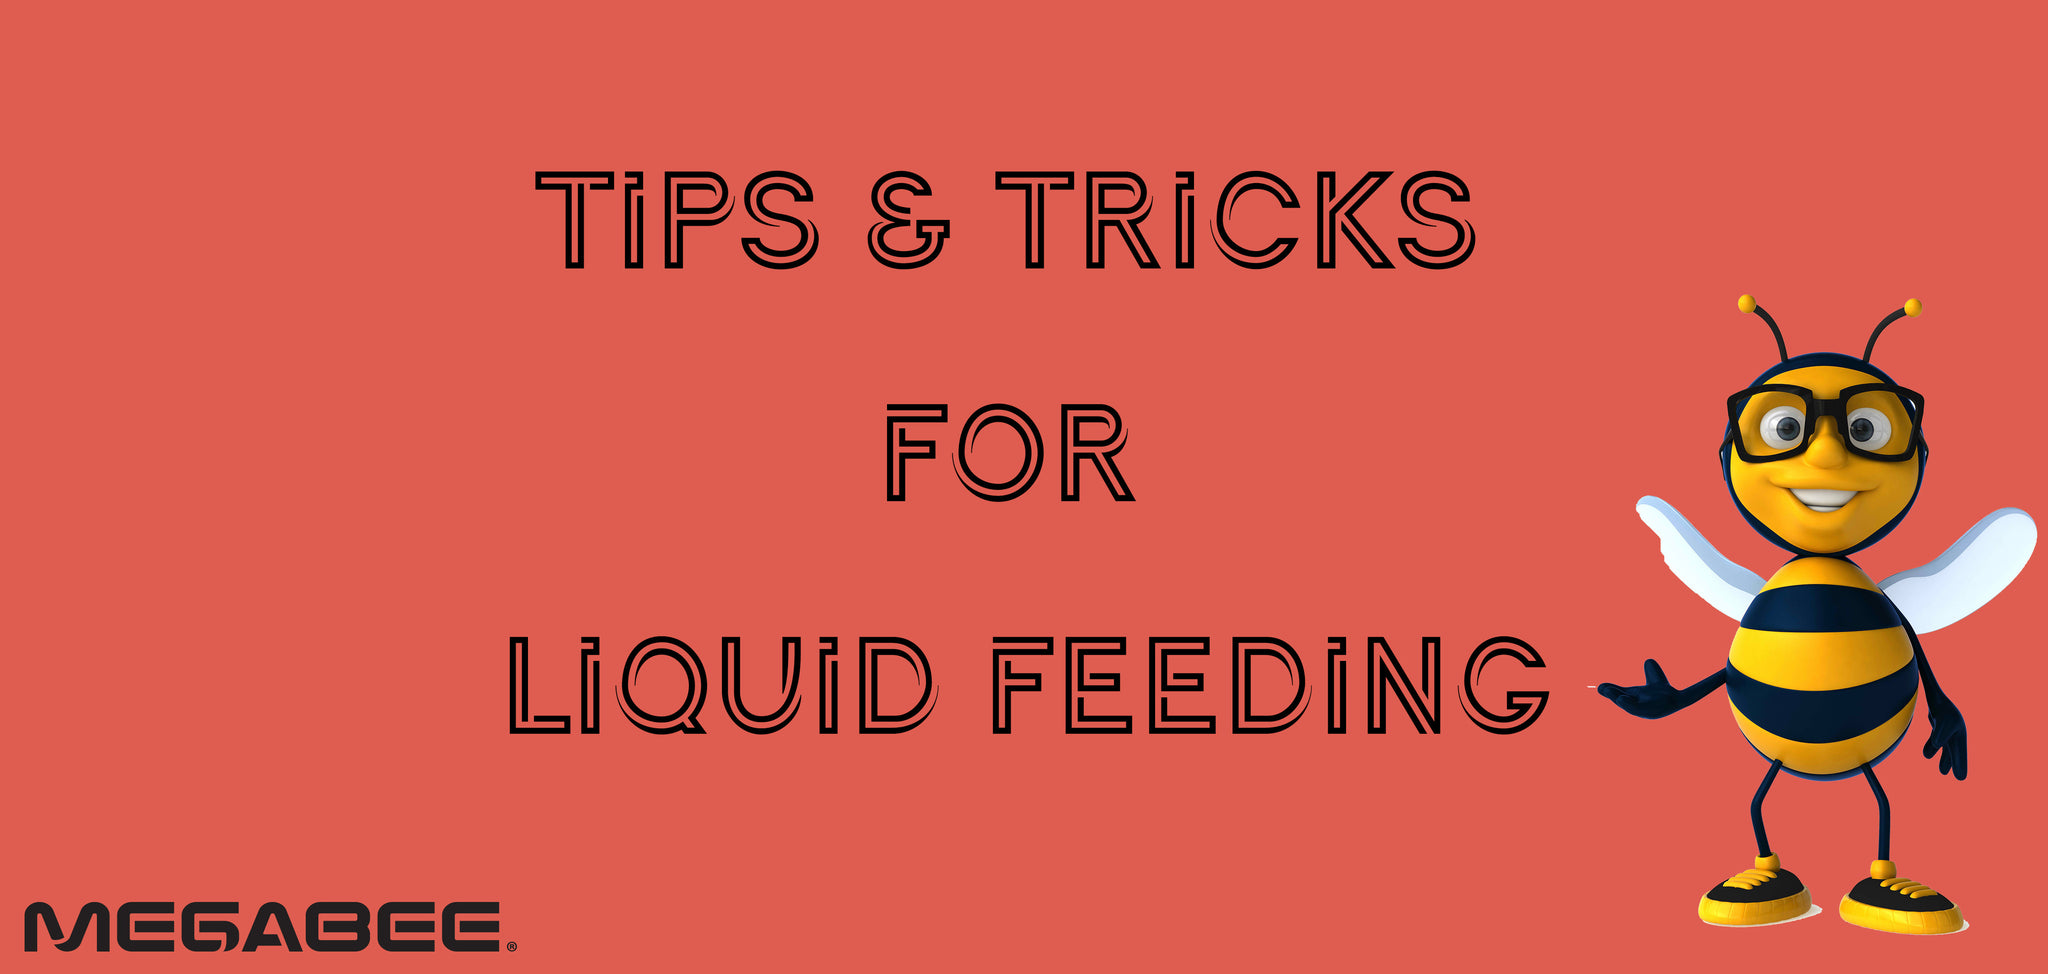 Tips & Tricks for Liquid Feeding